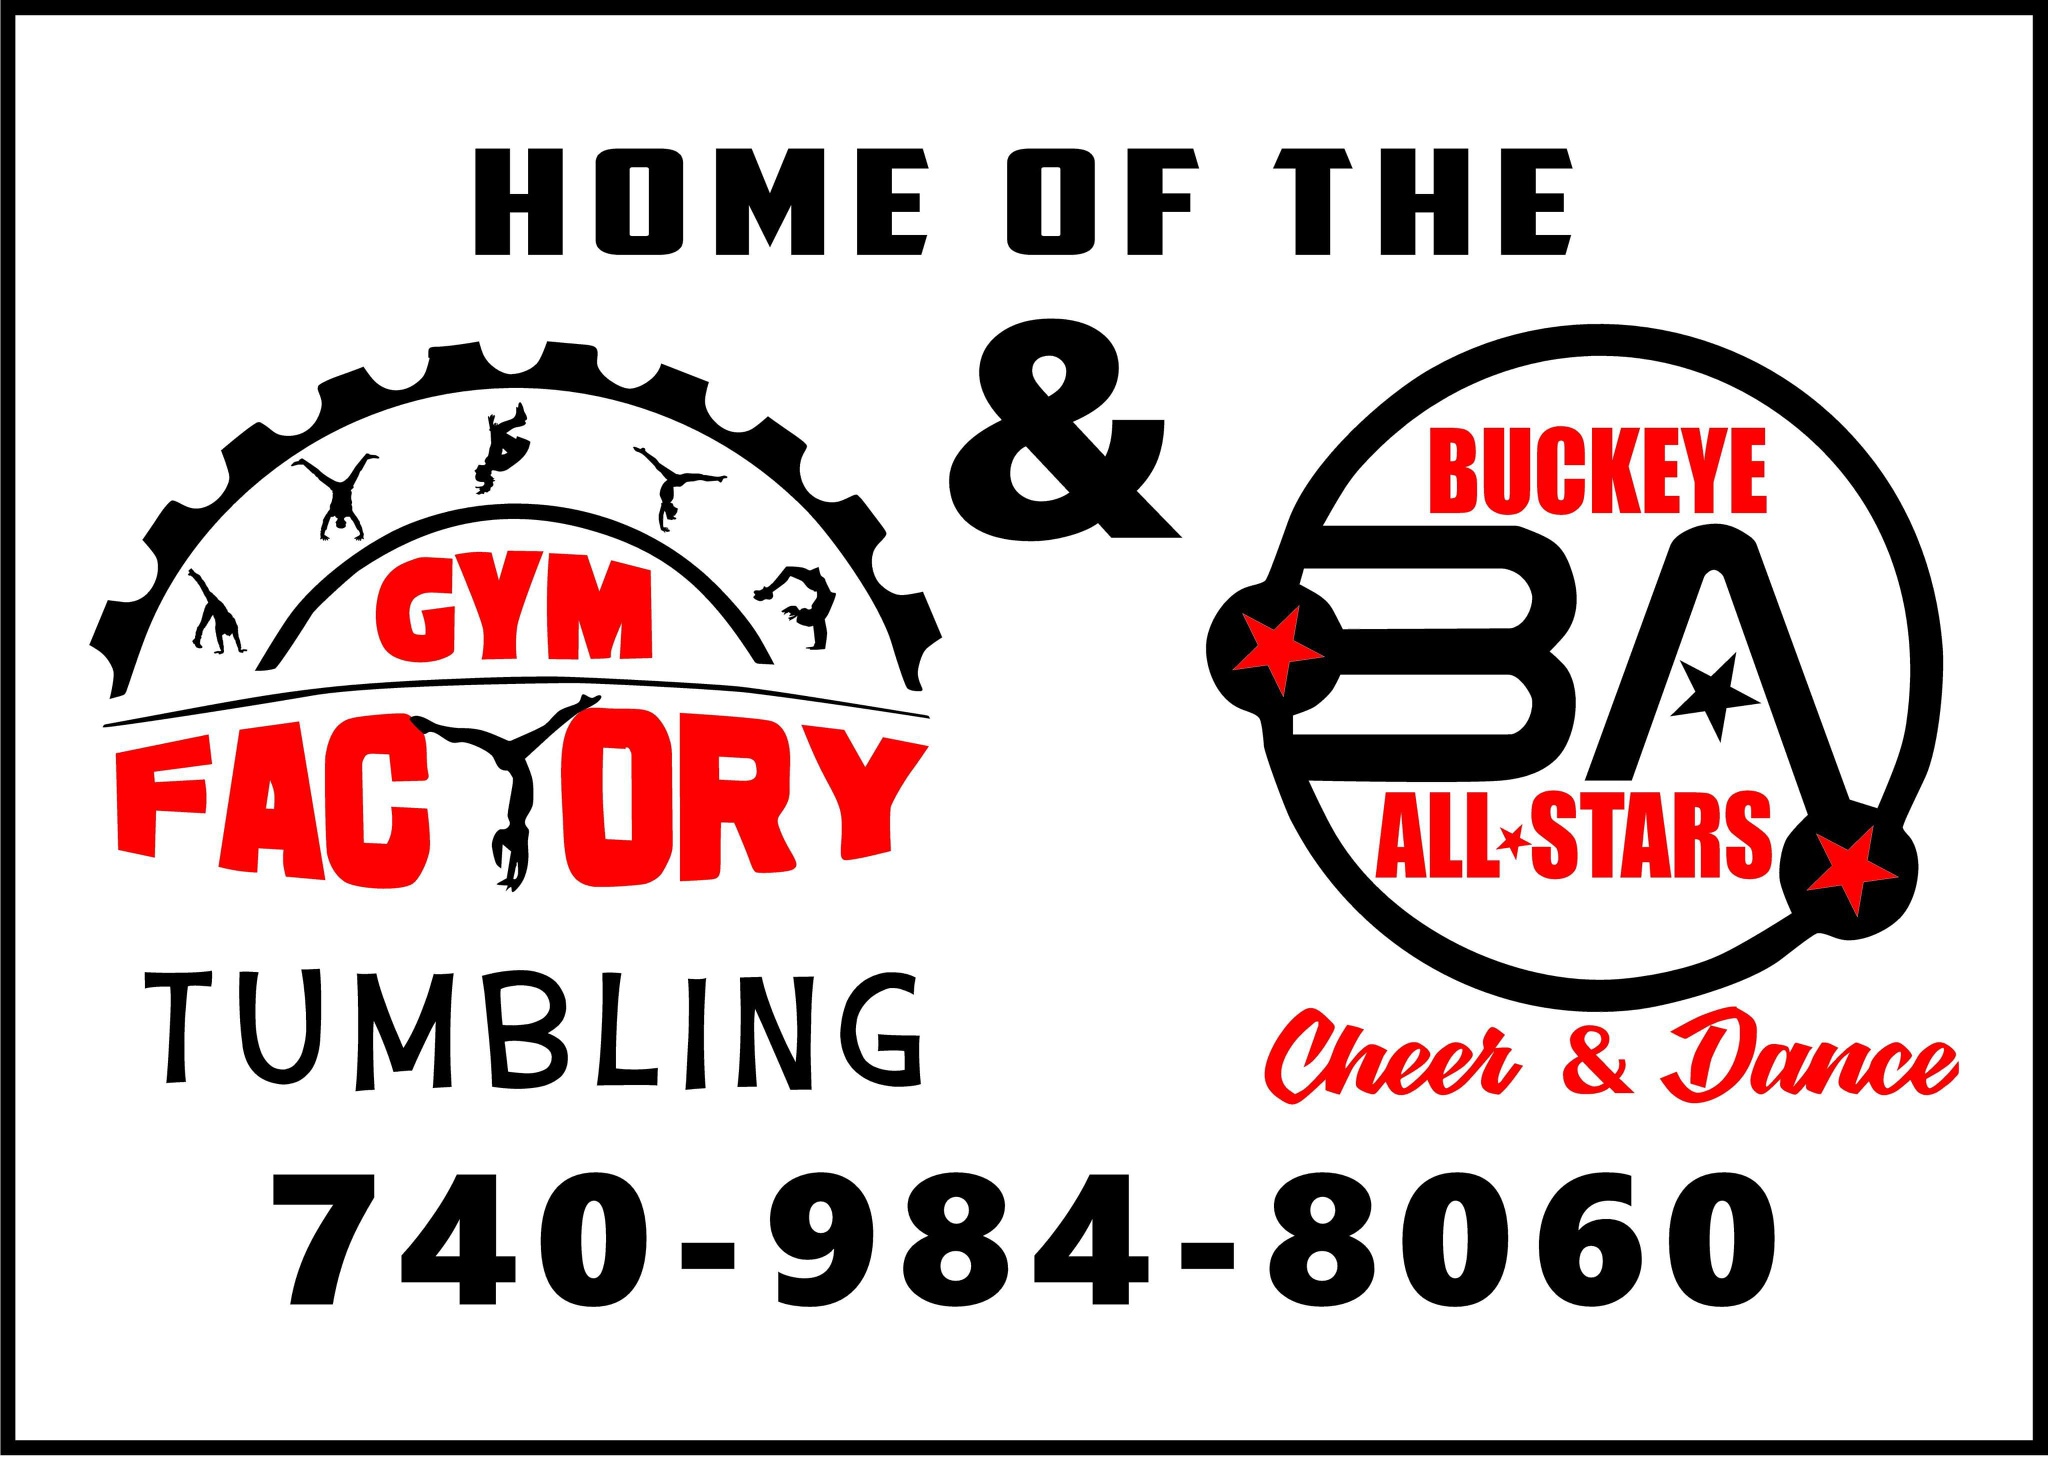 The Gym factory and Buckeye Allstars logo